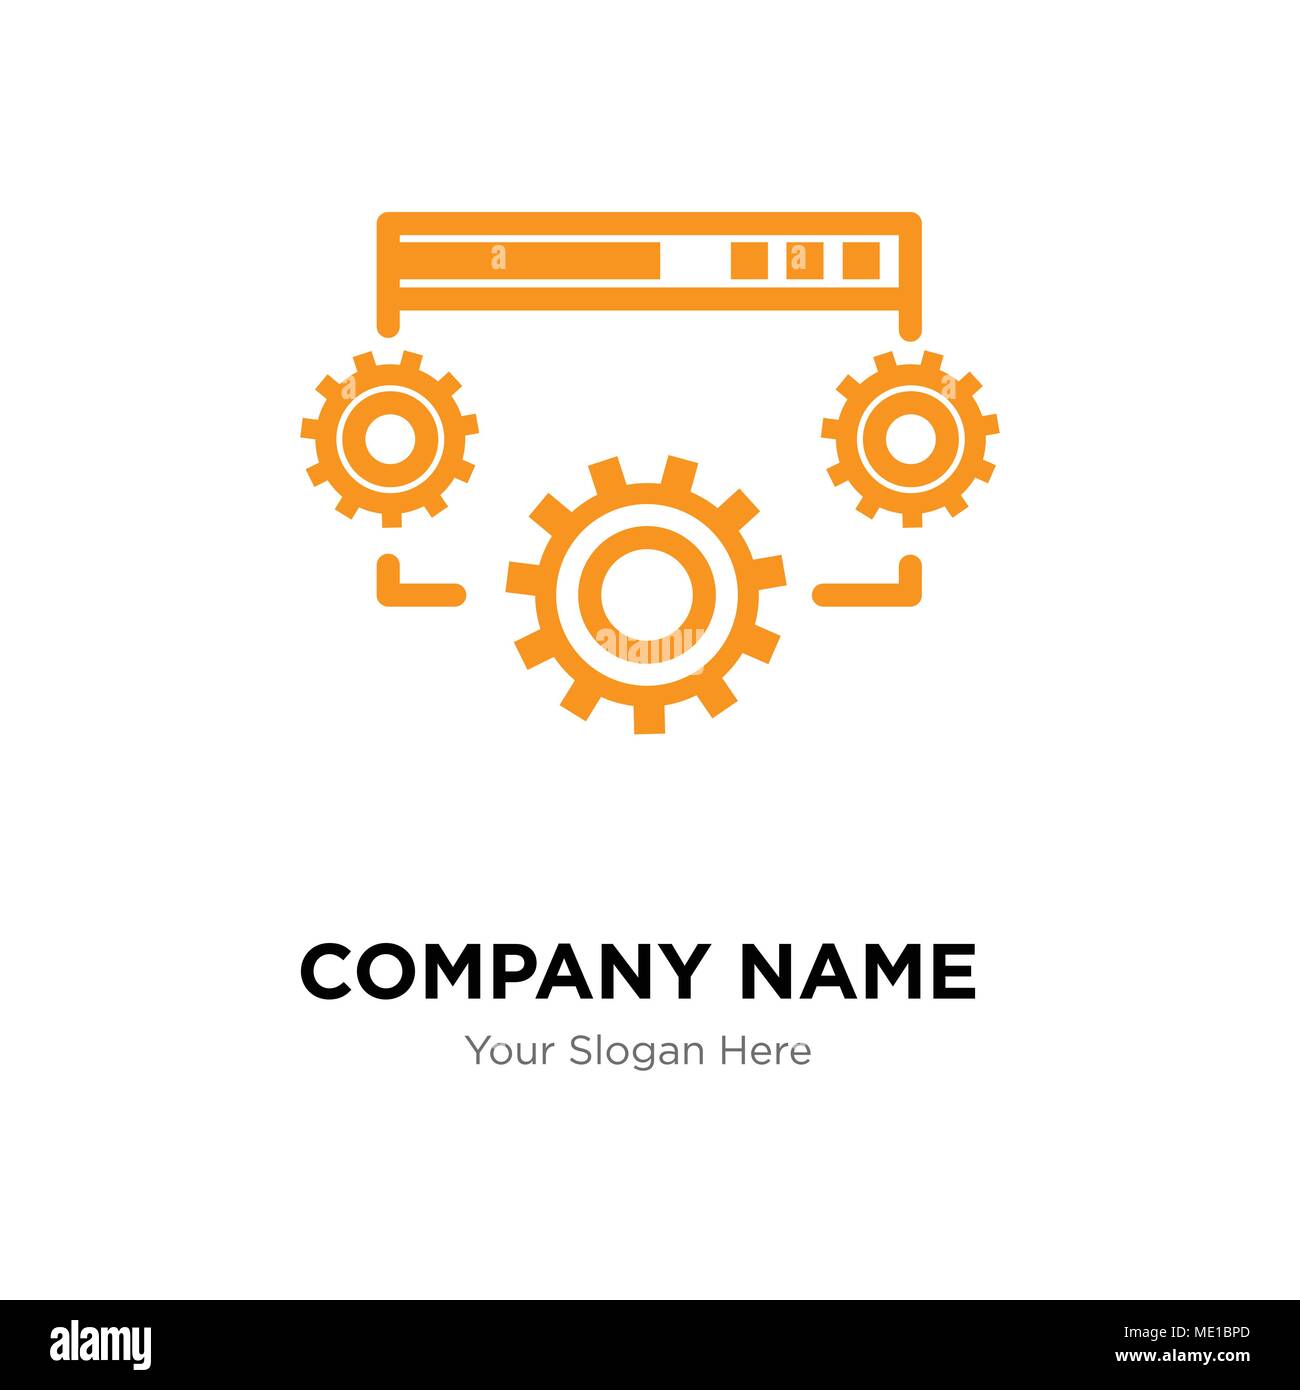 Data settings company logo design template, Business corporate vector icon Stock Vector